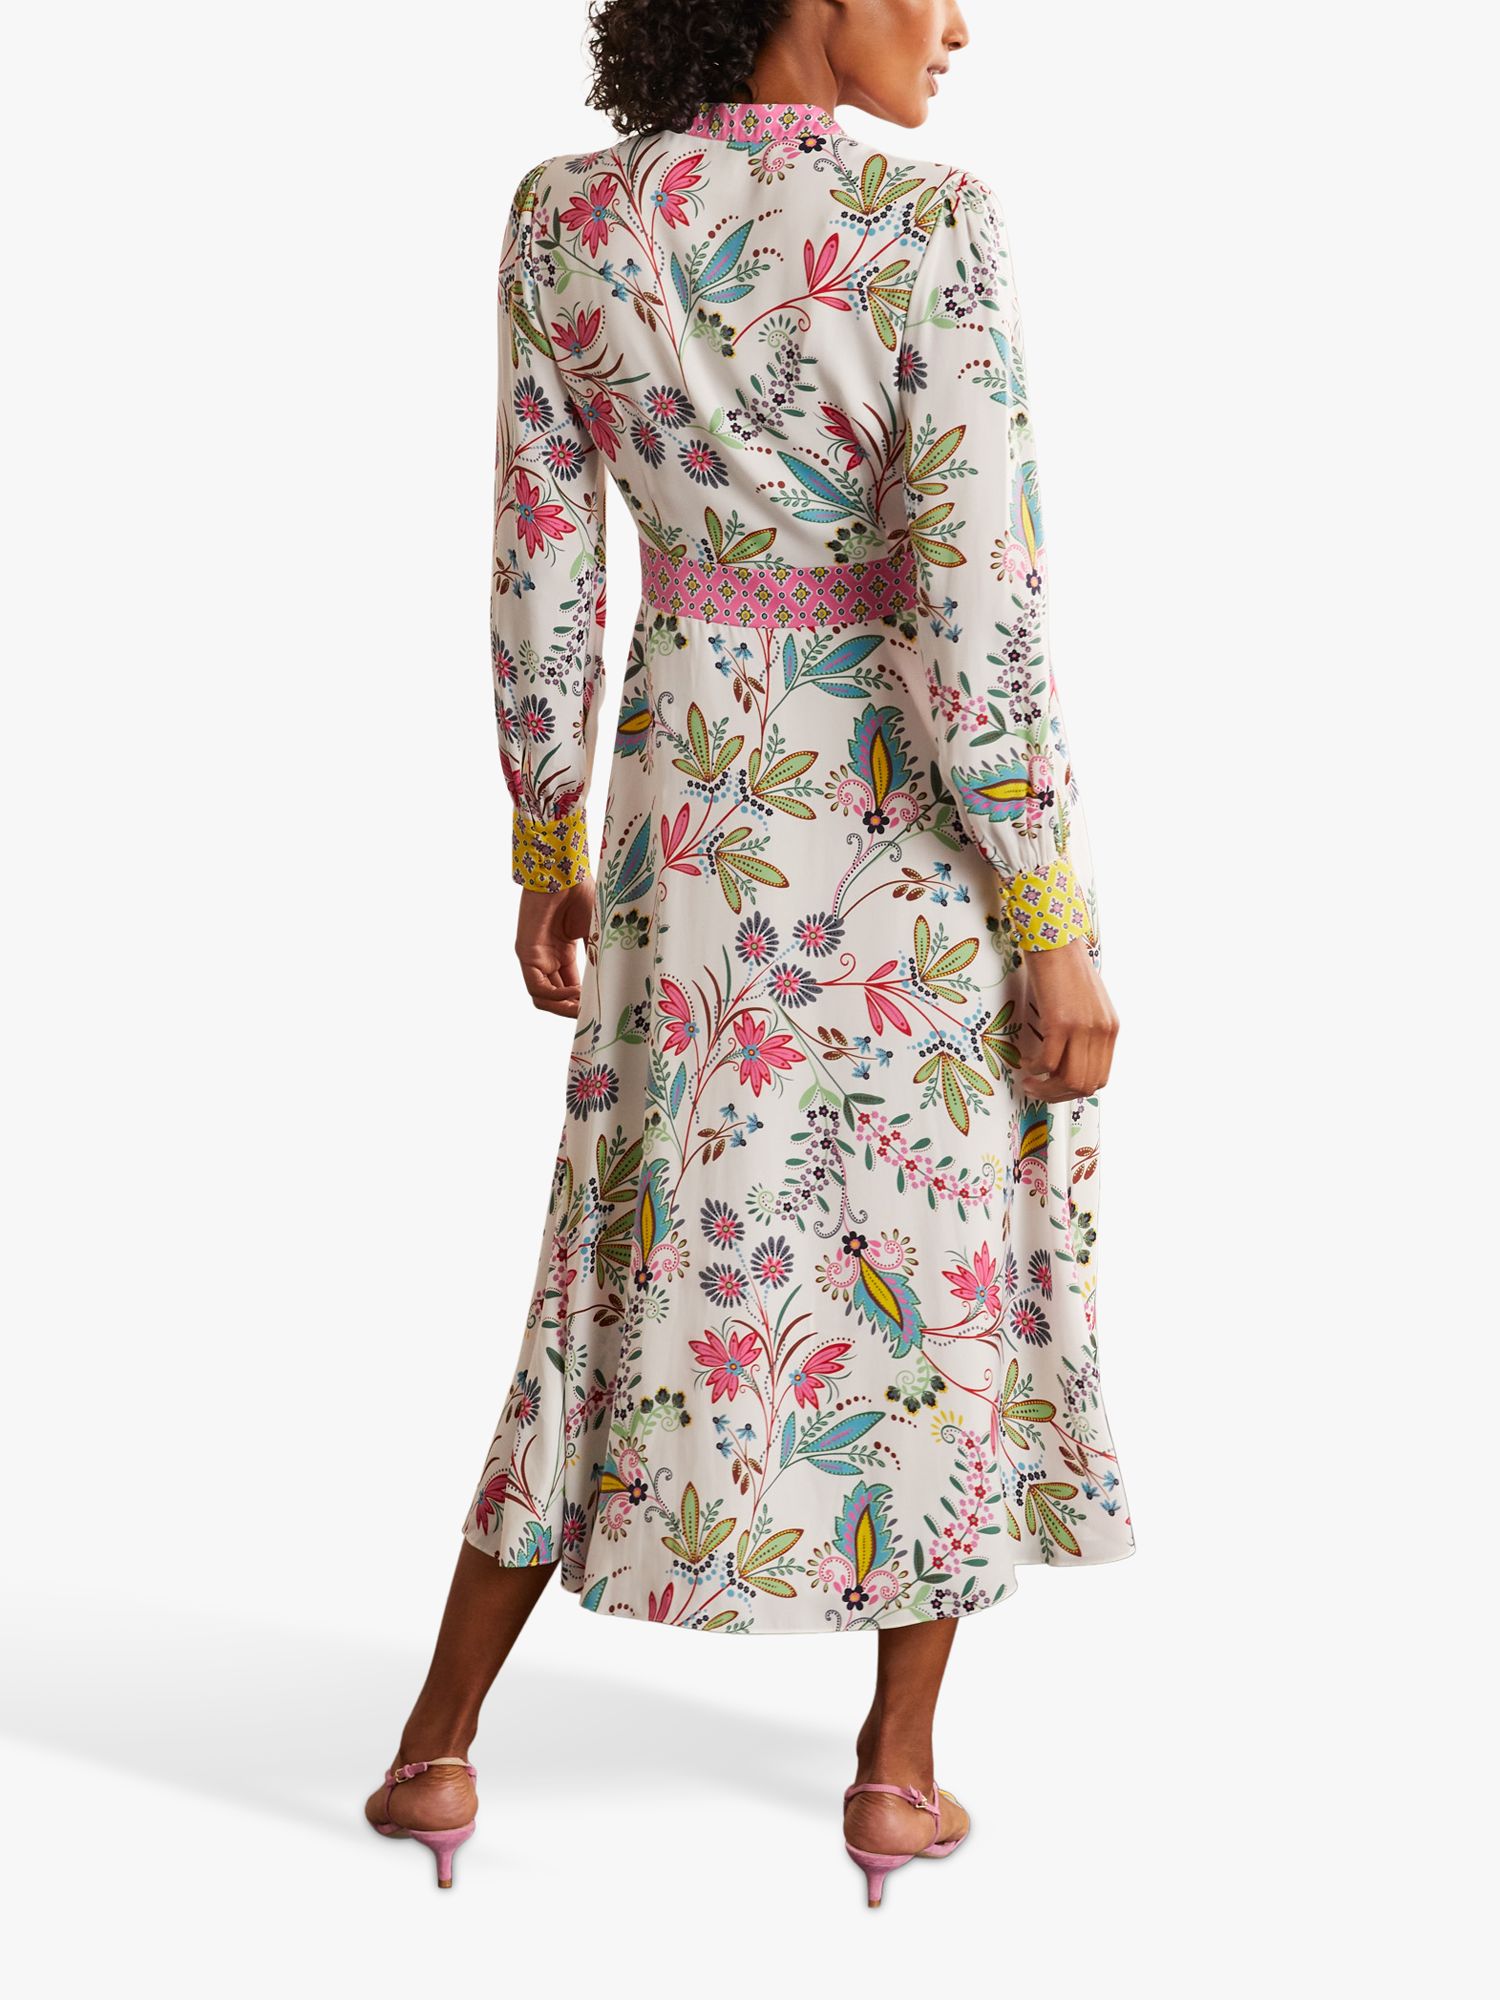 Boden Mollie Floral Bloom Print Shirt Dress, Ivory/Multi